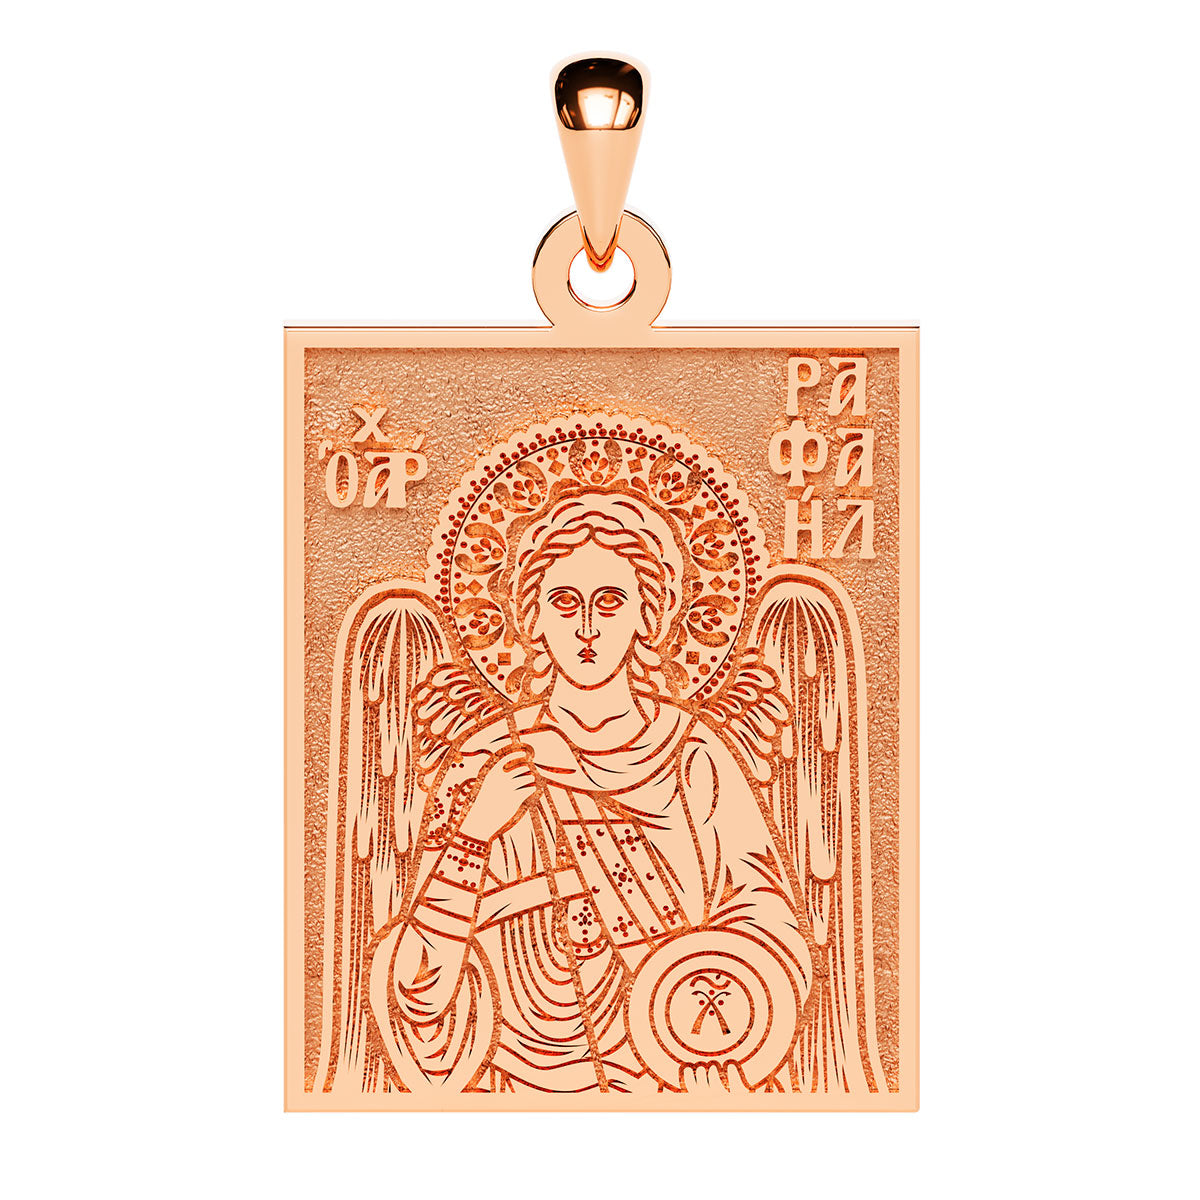 Saint Raphael the Archangel Greek Orthodox Icon Tag Medal